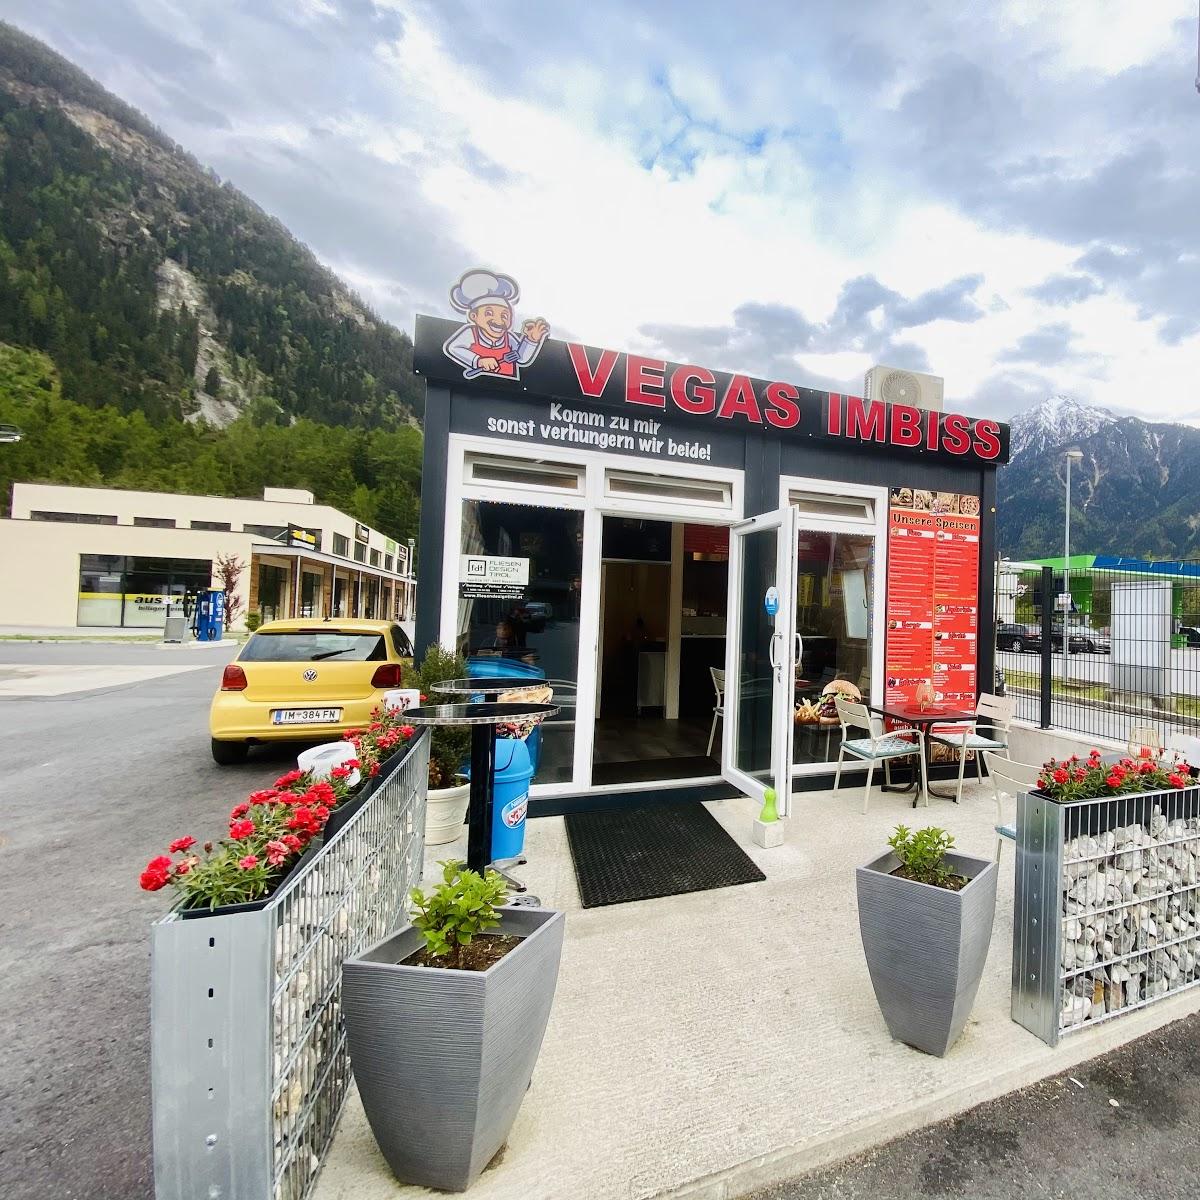 Restaurant "Vegas Imbiss" in Ötztal Bahnhof